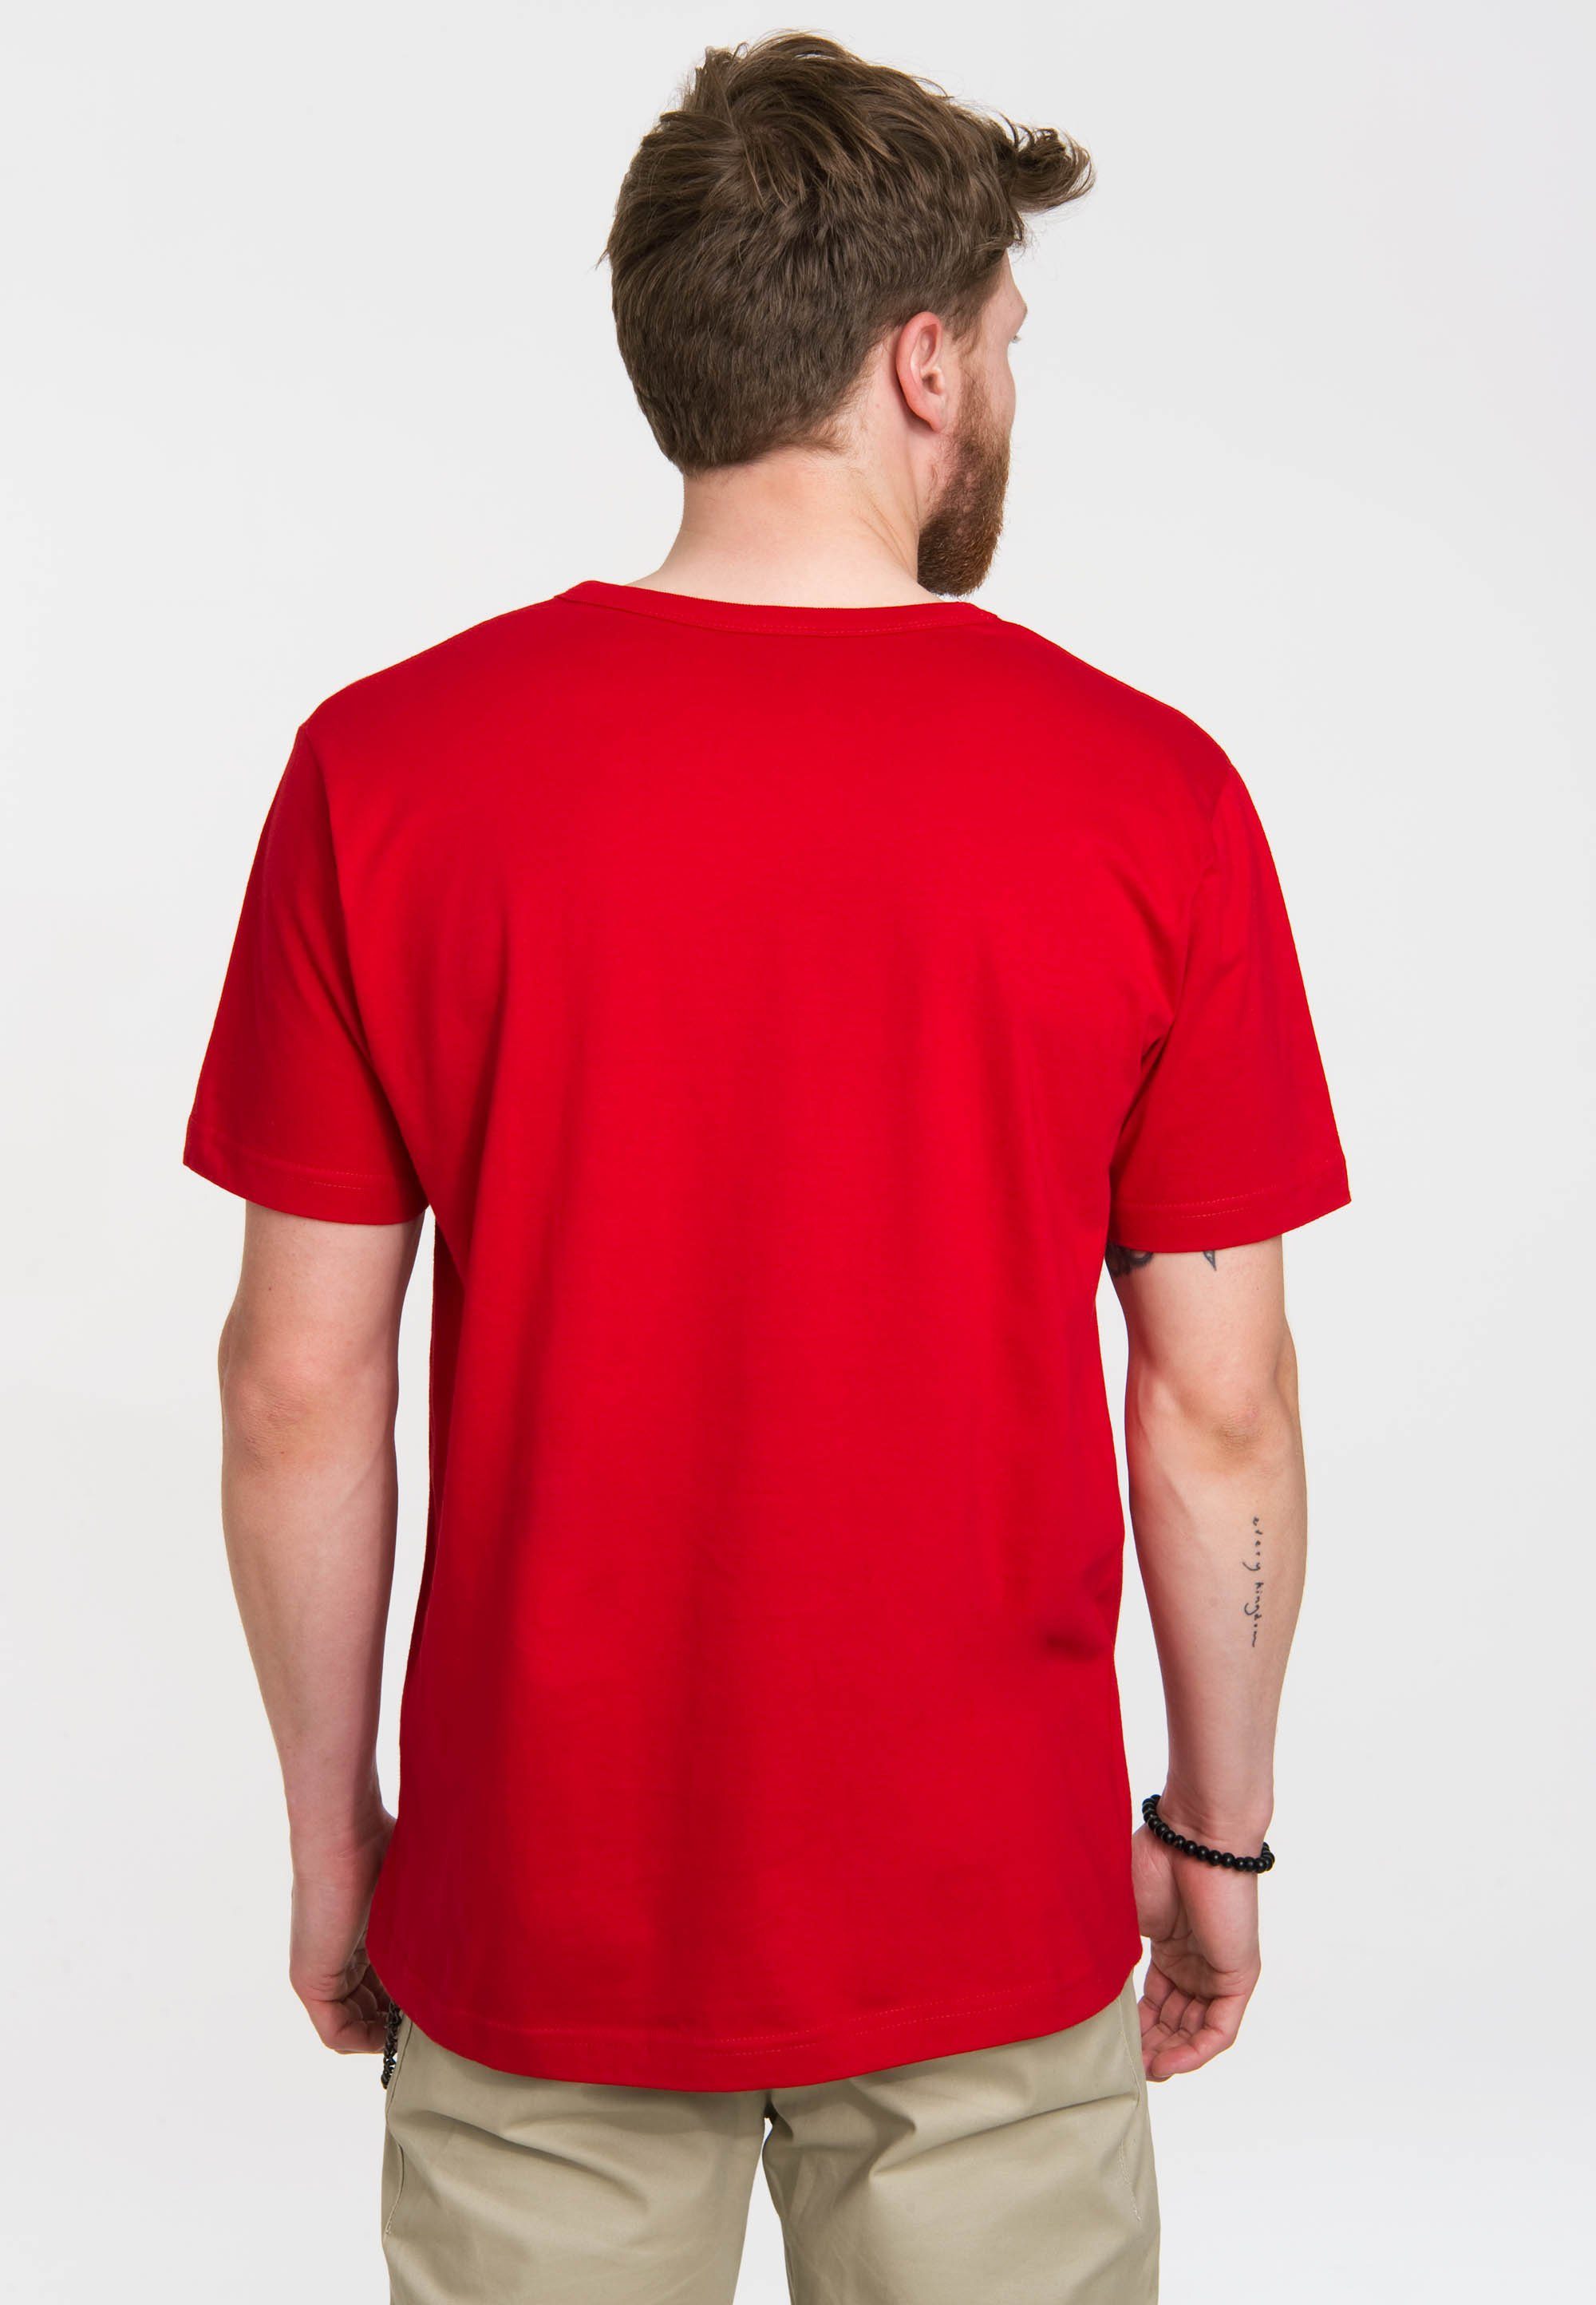 Frontdruck - - Flash coolem Blitz DC LOGOSHIRT Der T-Shirt Rote Logo mit